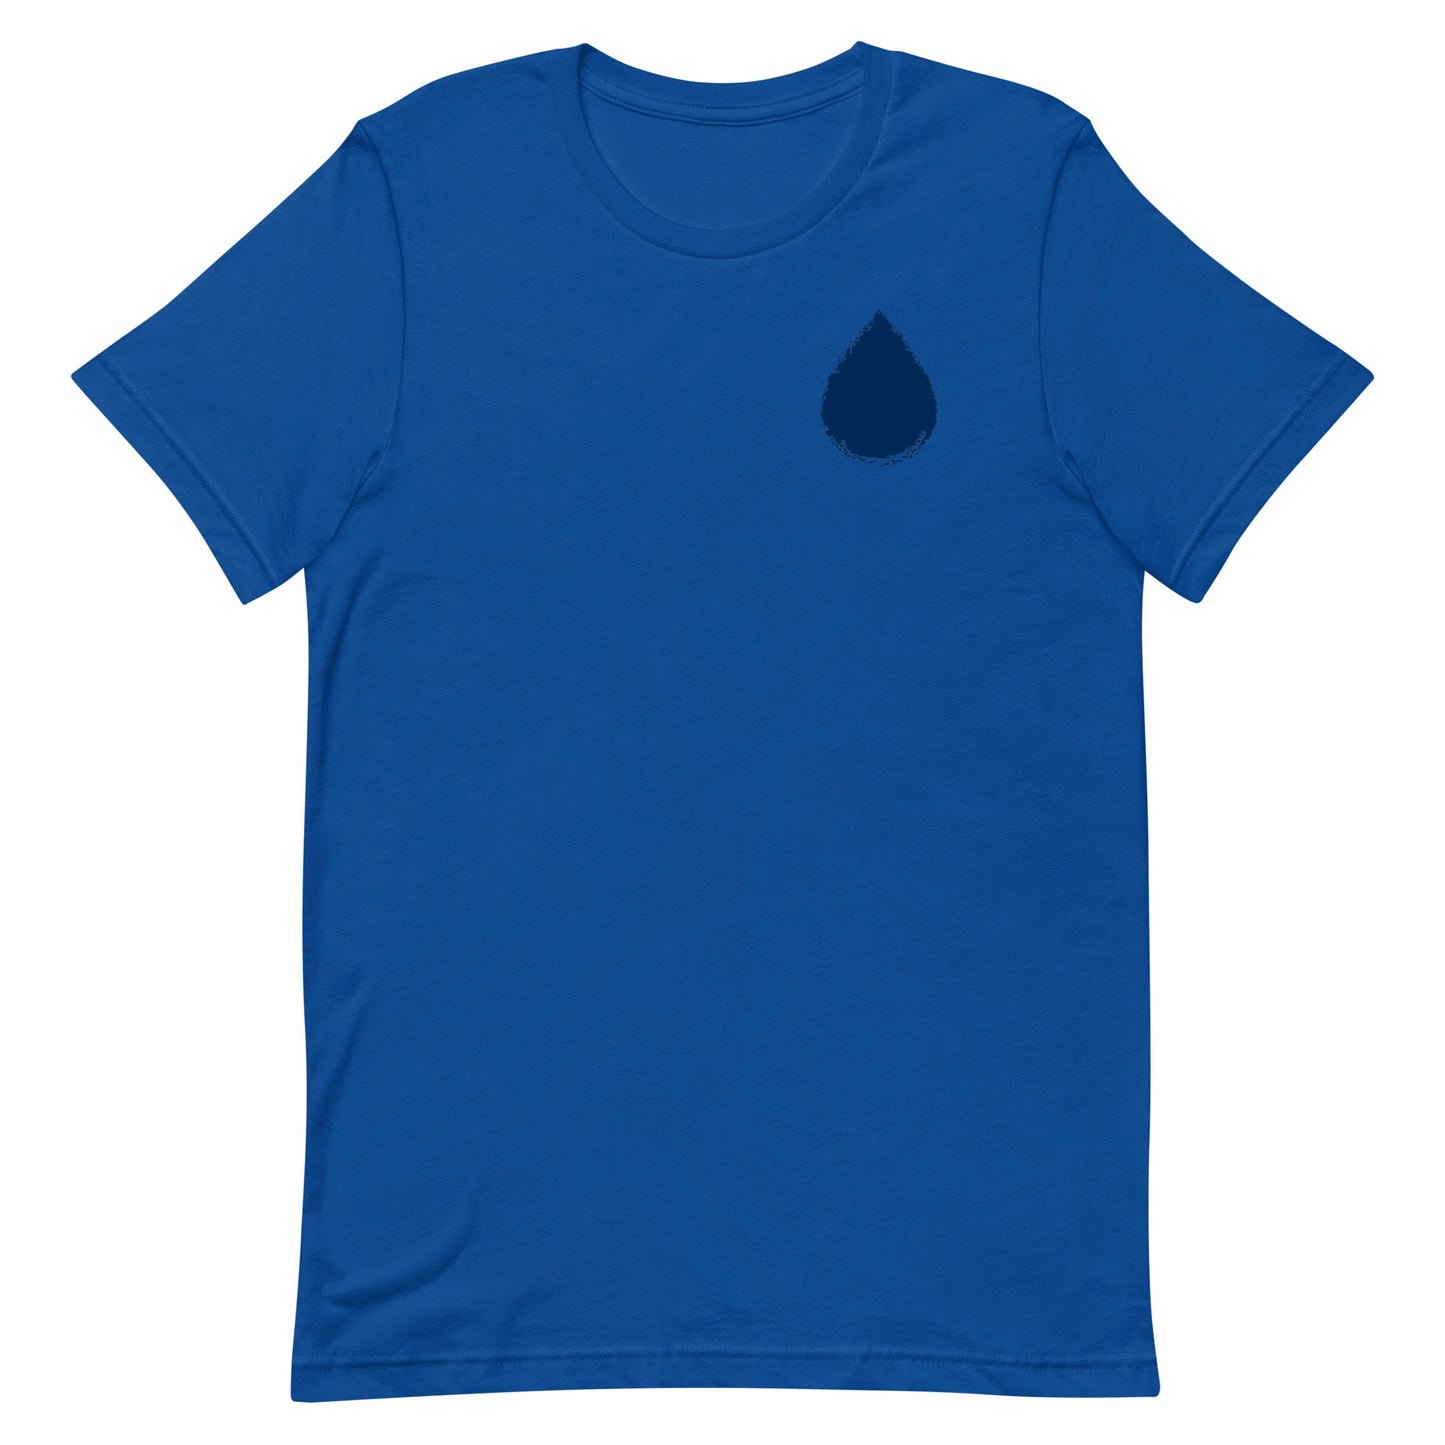 Clone T-shirt - Tup